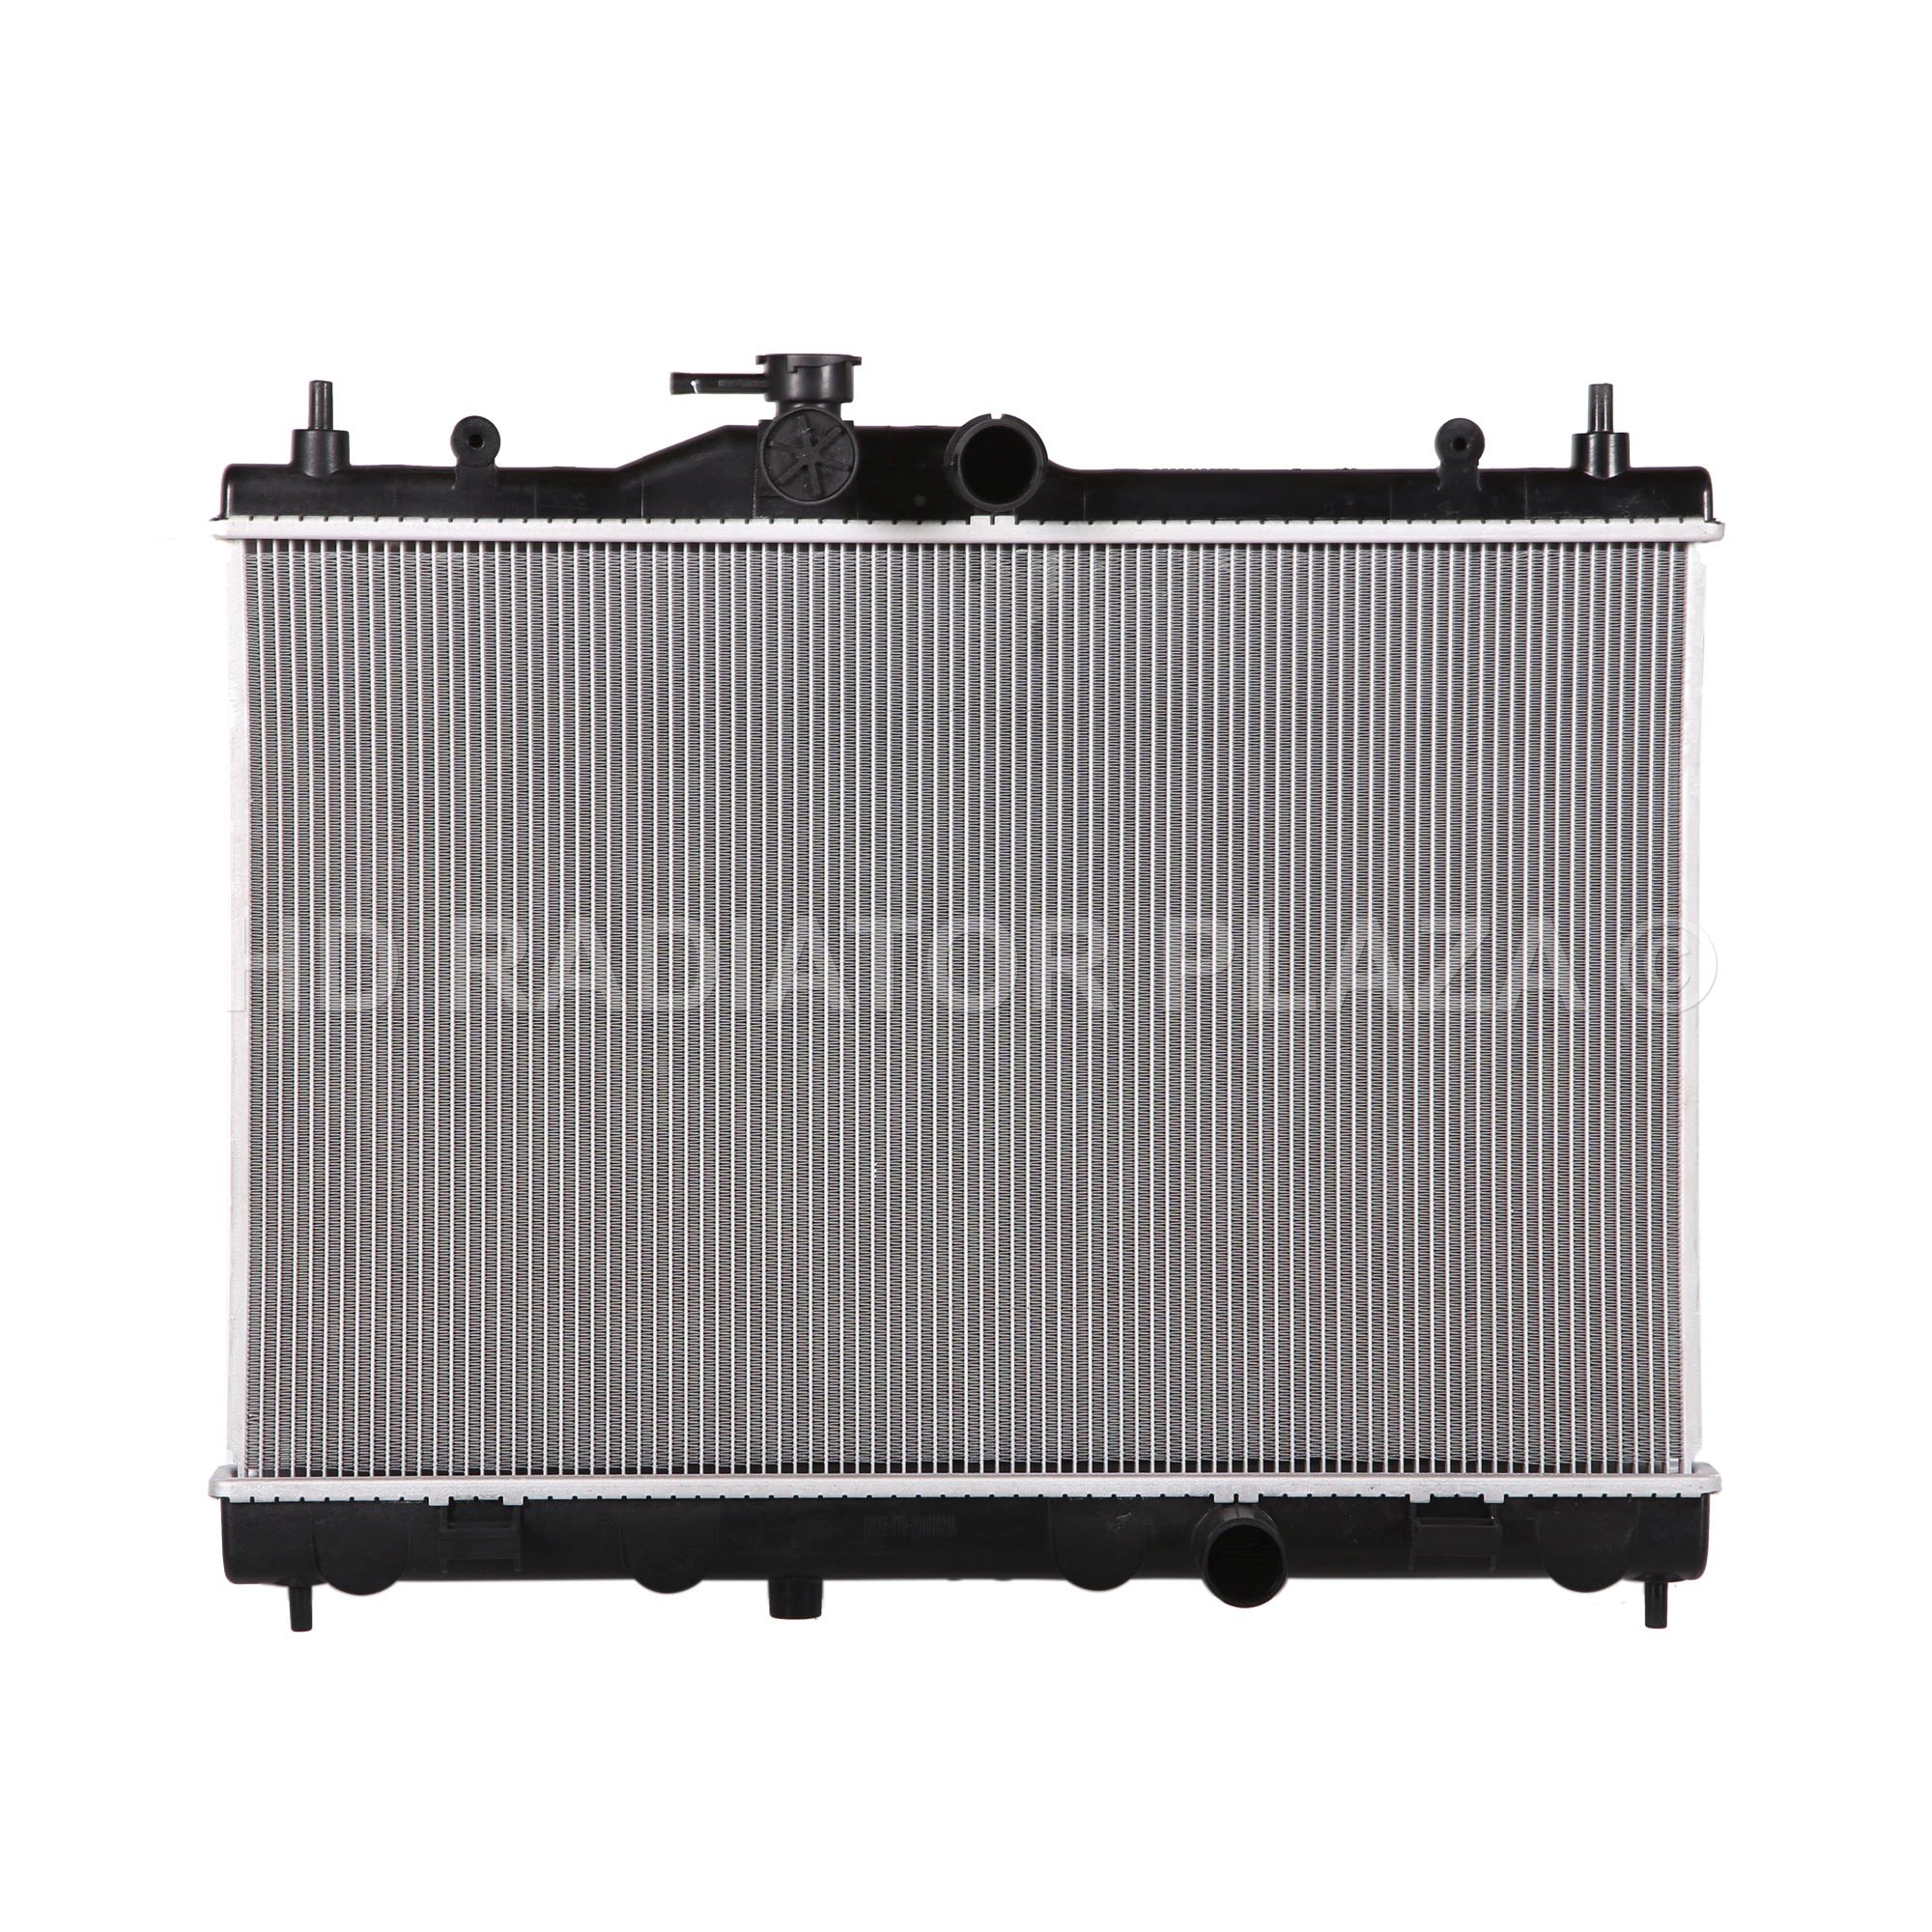 Radiator for 09-14 Nissan Cube